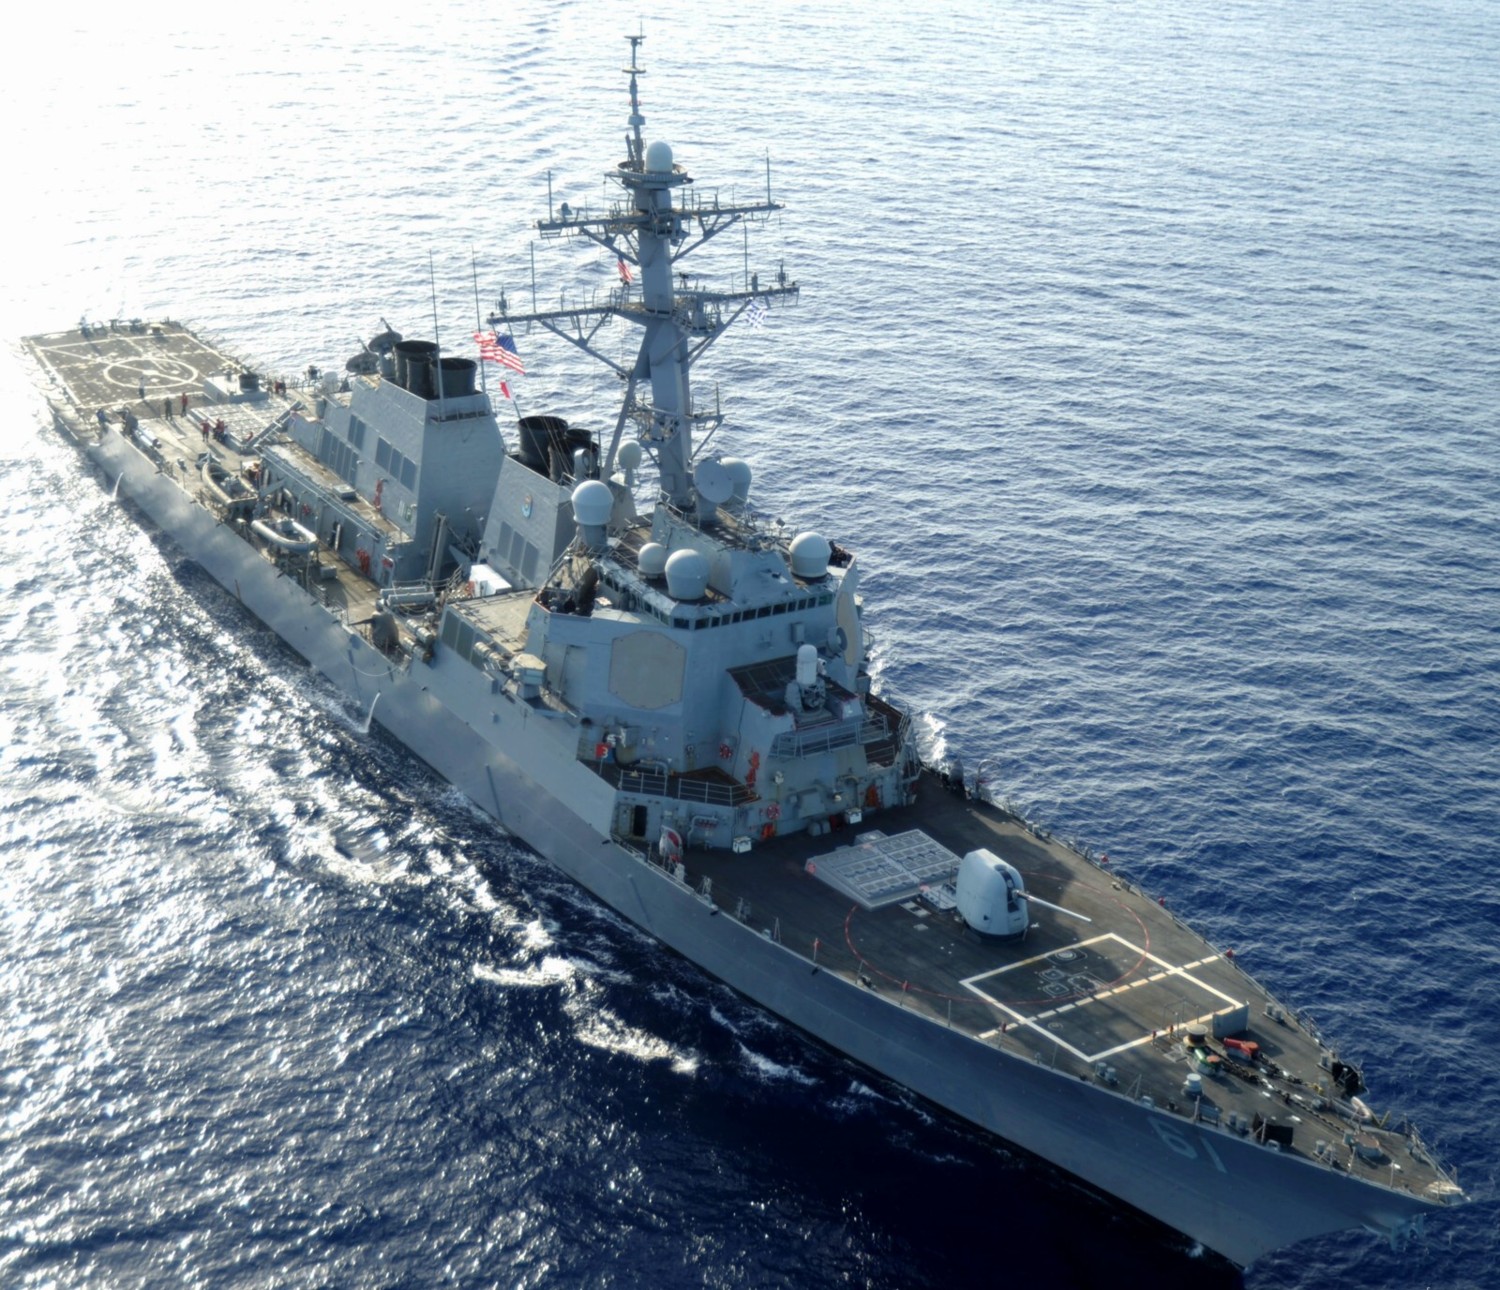 ddg-61 uss ramage guided missile destroyer arleigh burke class aegis us navy mediterranean sea 87